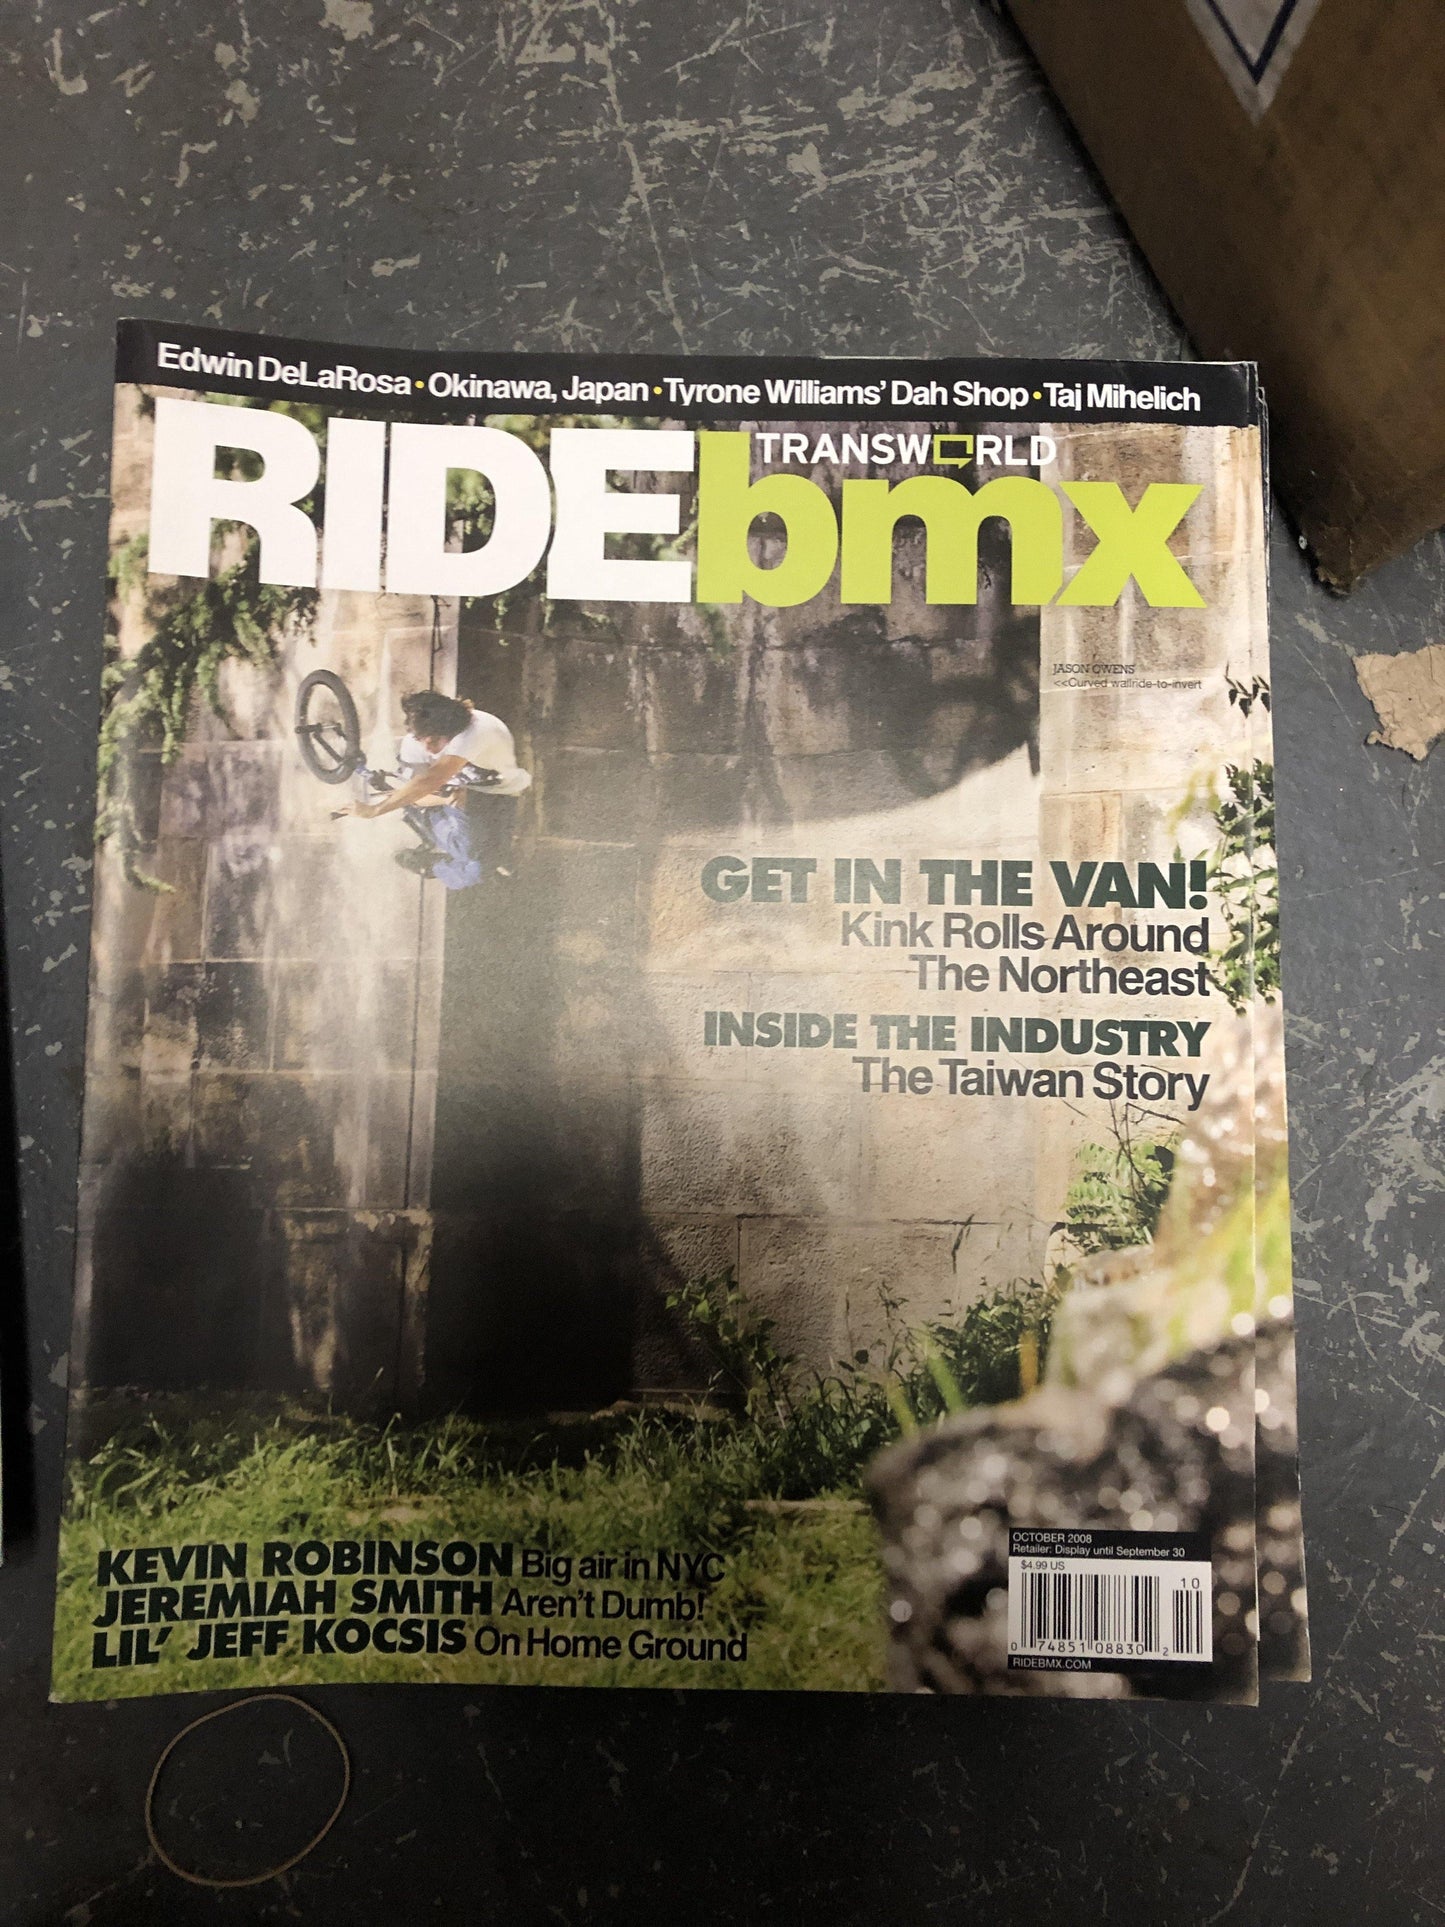 Ride BMX Magazine back issues 2008 - POWERS BMX